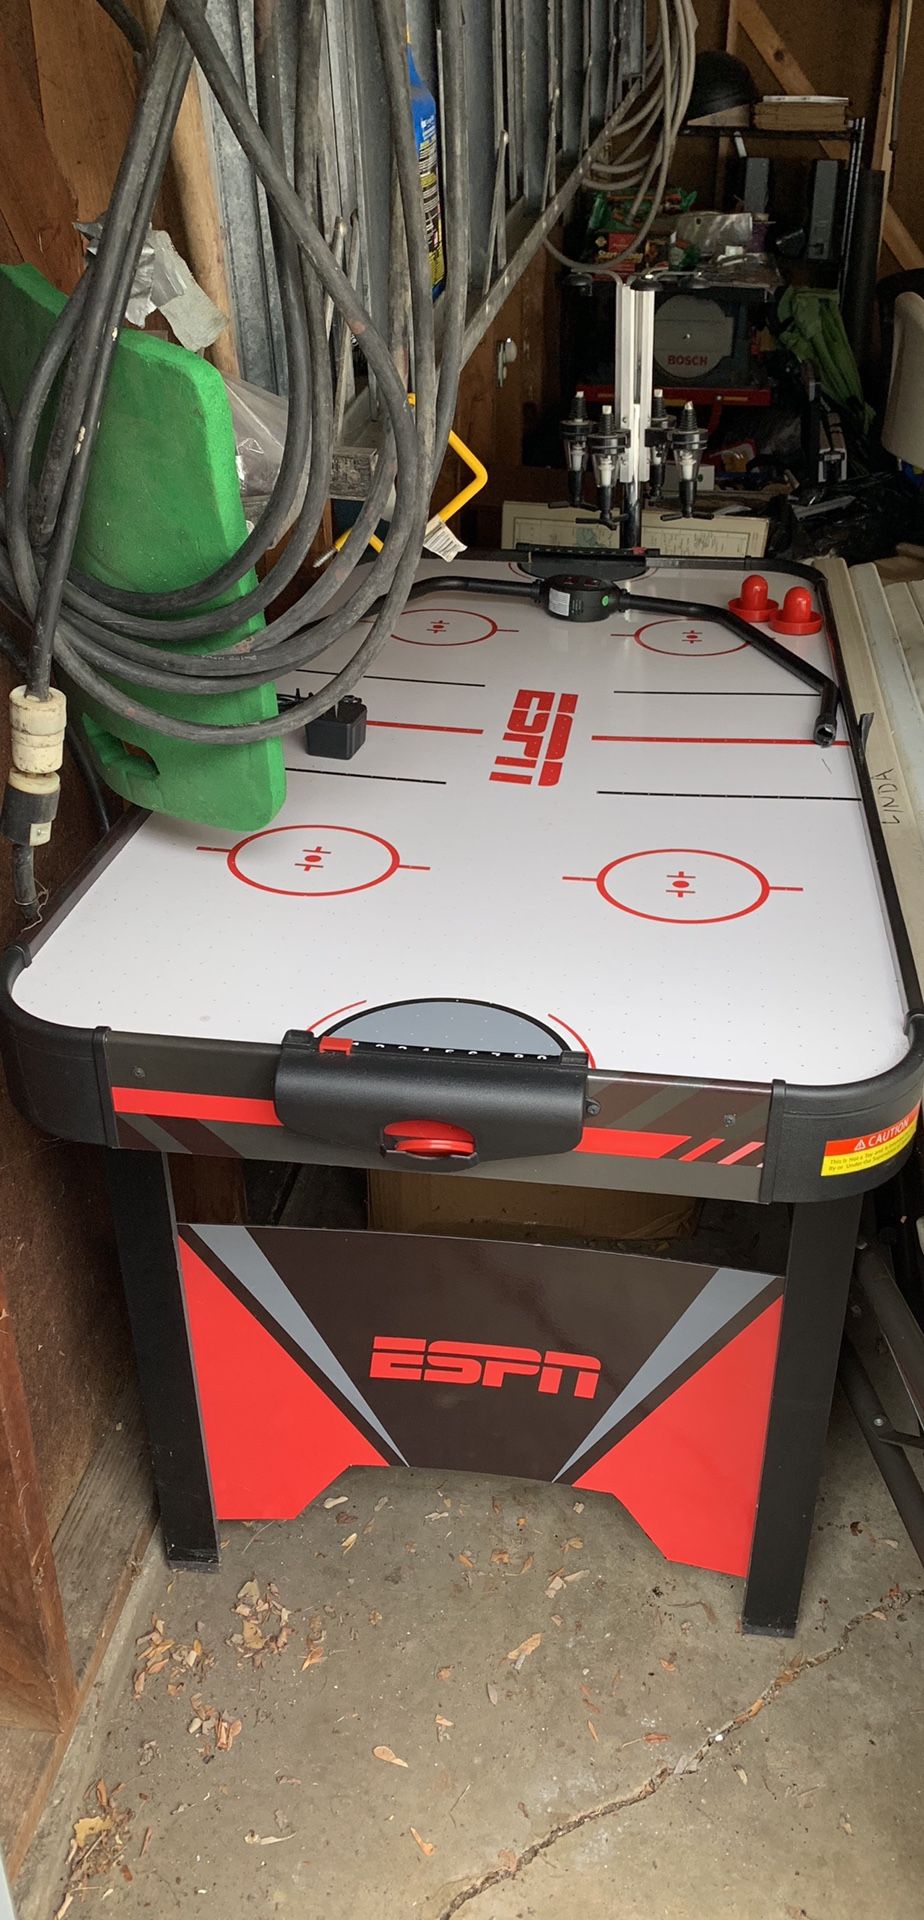 ESPN Air Hockey Table, good condition but broken scoreboard (still keeps score, just broke off the sides)